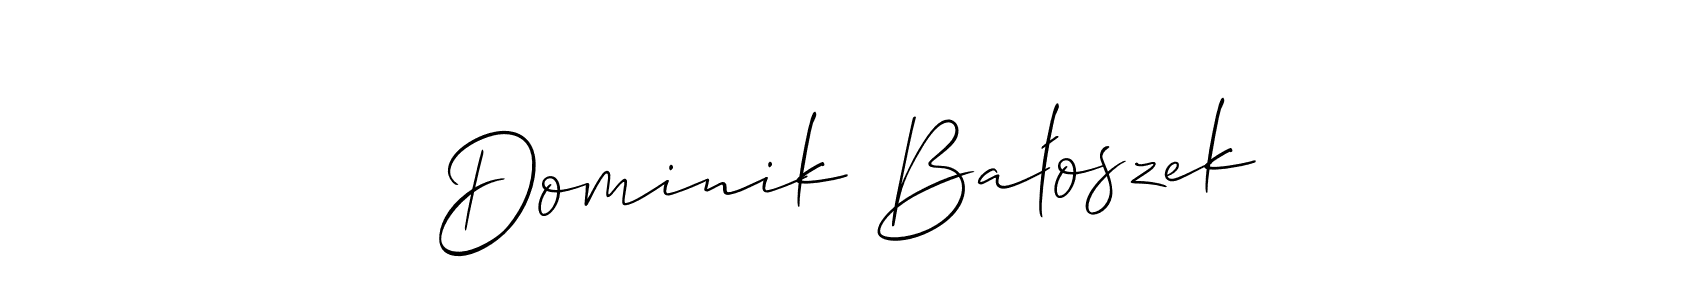 Best and Professional Signature Style for Dominik Bałoszek. Allison_Script Best Signature Style Collection. Dominik Bałoszek signature style 2 images and pictures png